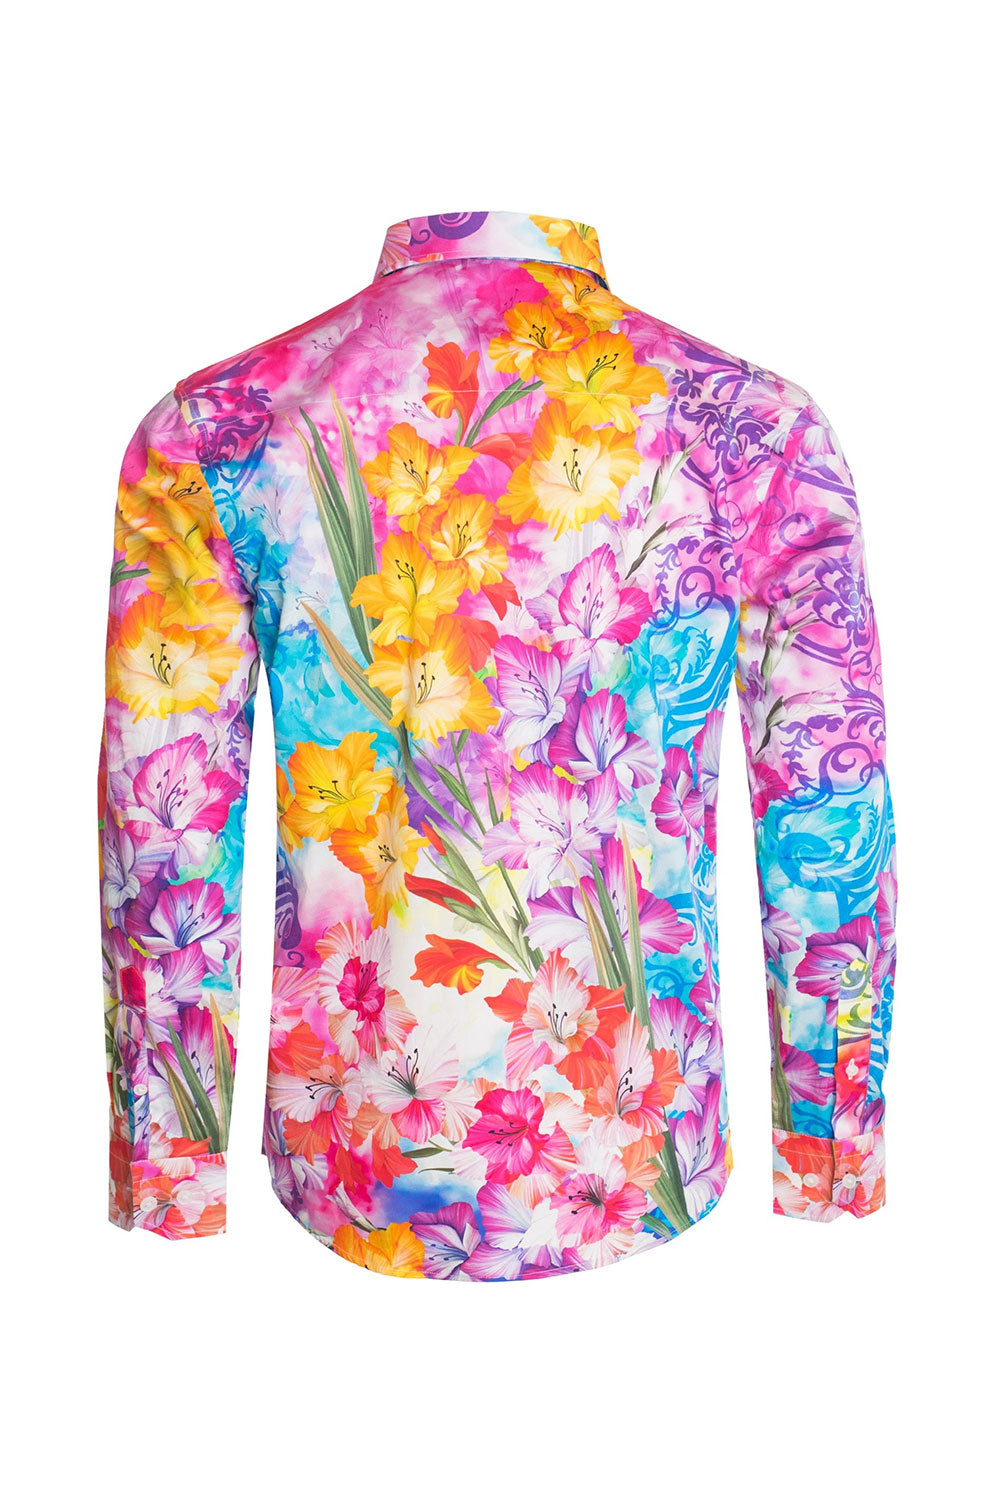 BARABAS Men's Rhinestone Watercolor Floral Printed Dress Shirts SP210